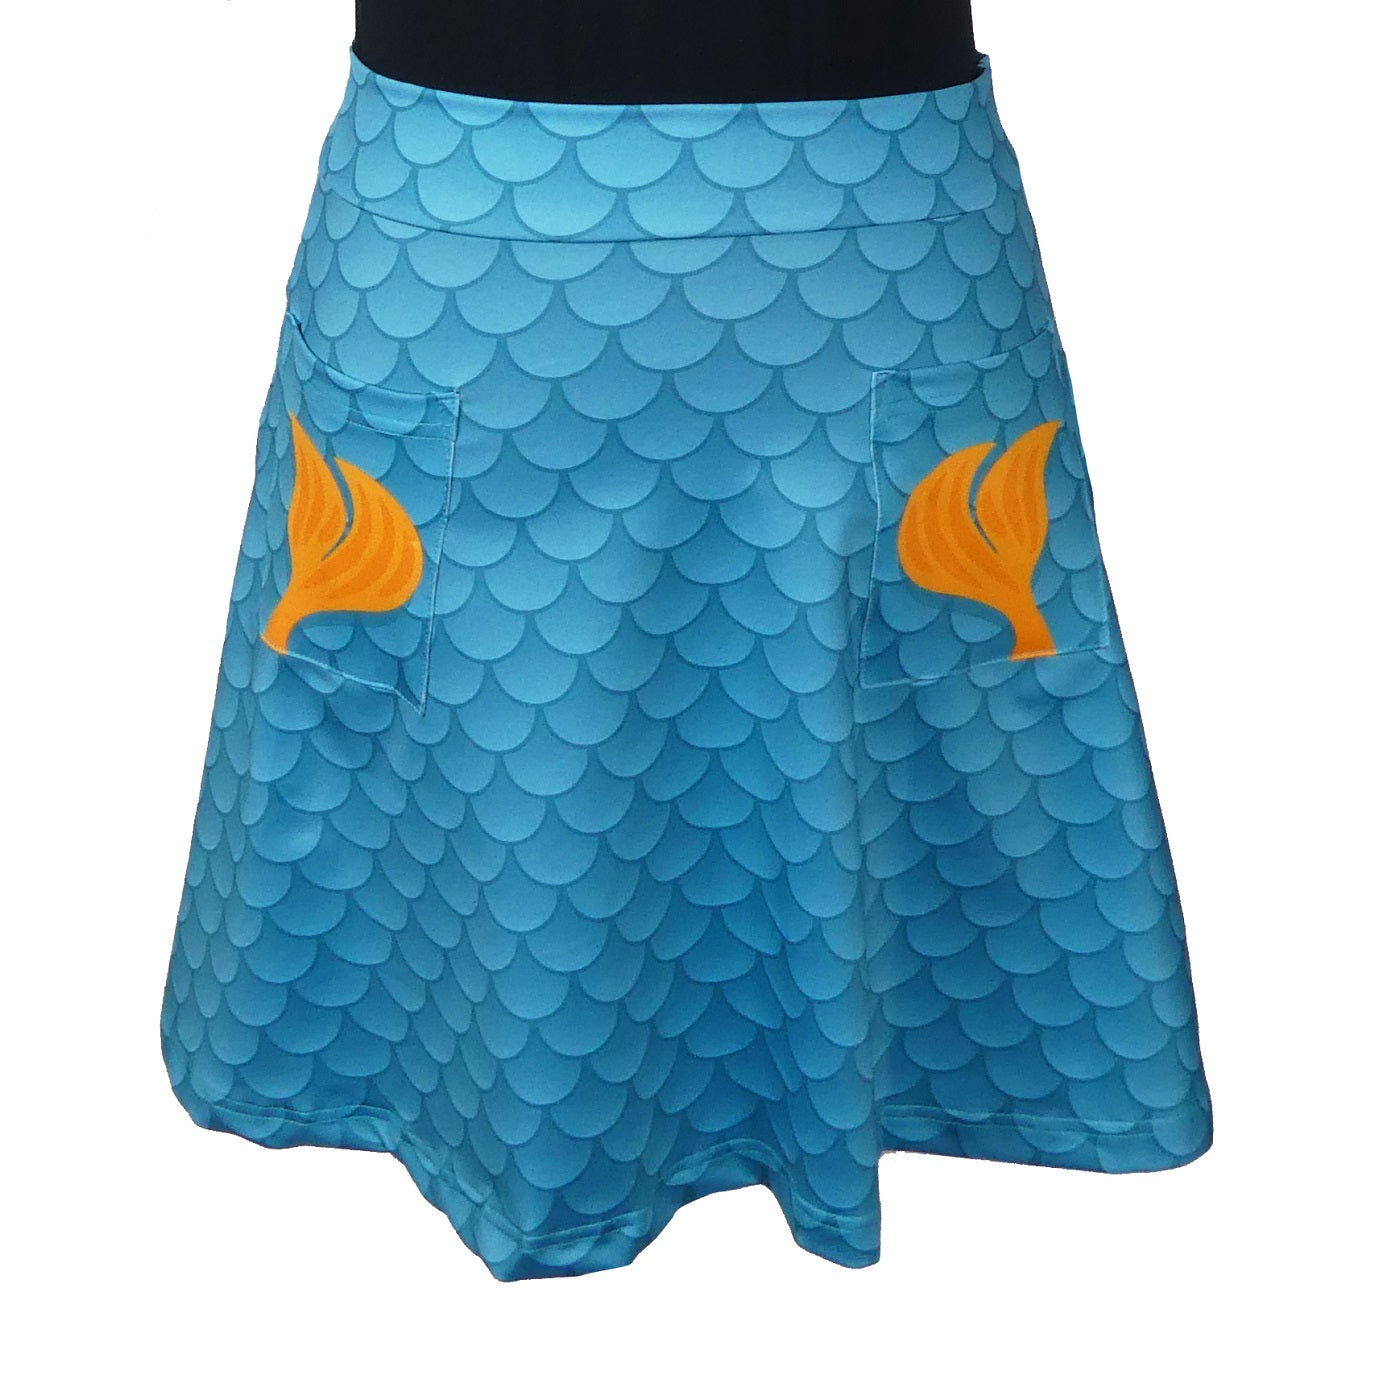 Tully Short Skirt by RainbowsAndFairies.com.au (Mermaid - Under The Sea - Skirt With Pockets - Aline Skirt - Vintage Inspired - Kitsch - Ocean) - SKU: CL_SHORT_TULLY_ORG - Pic-02